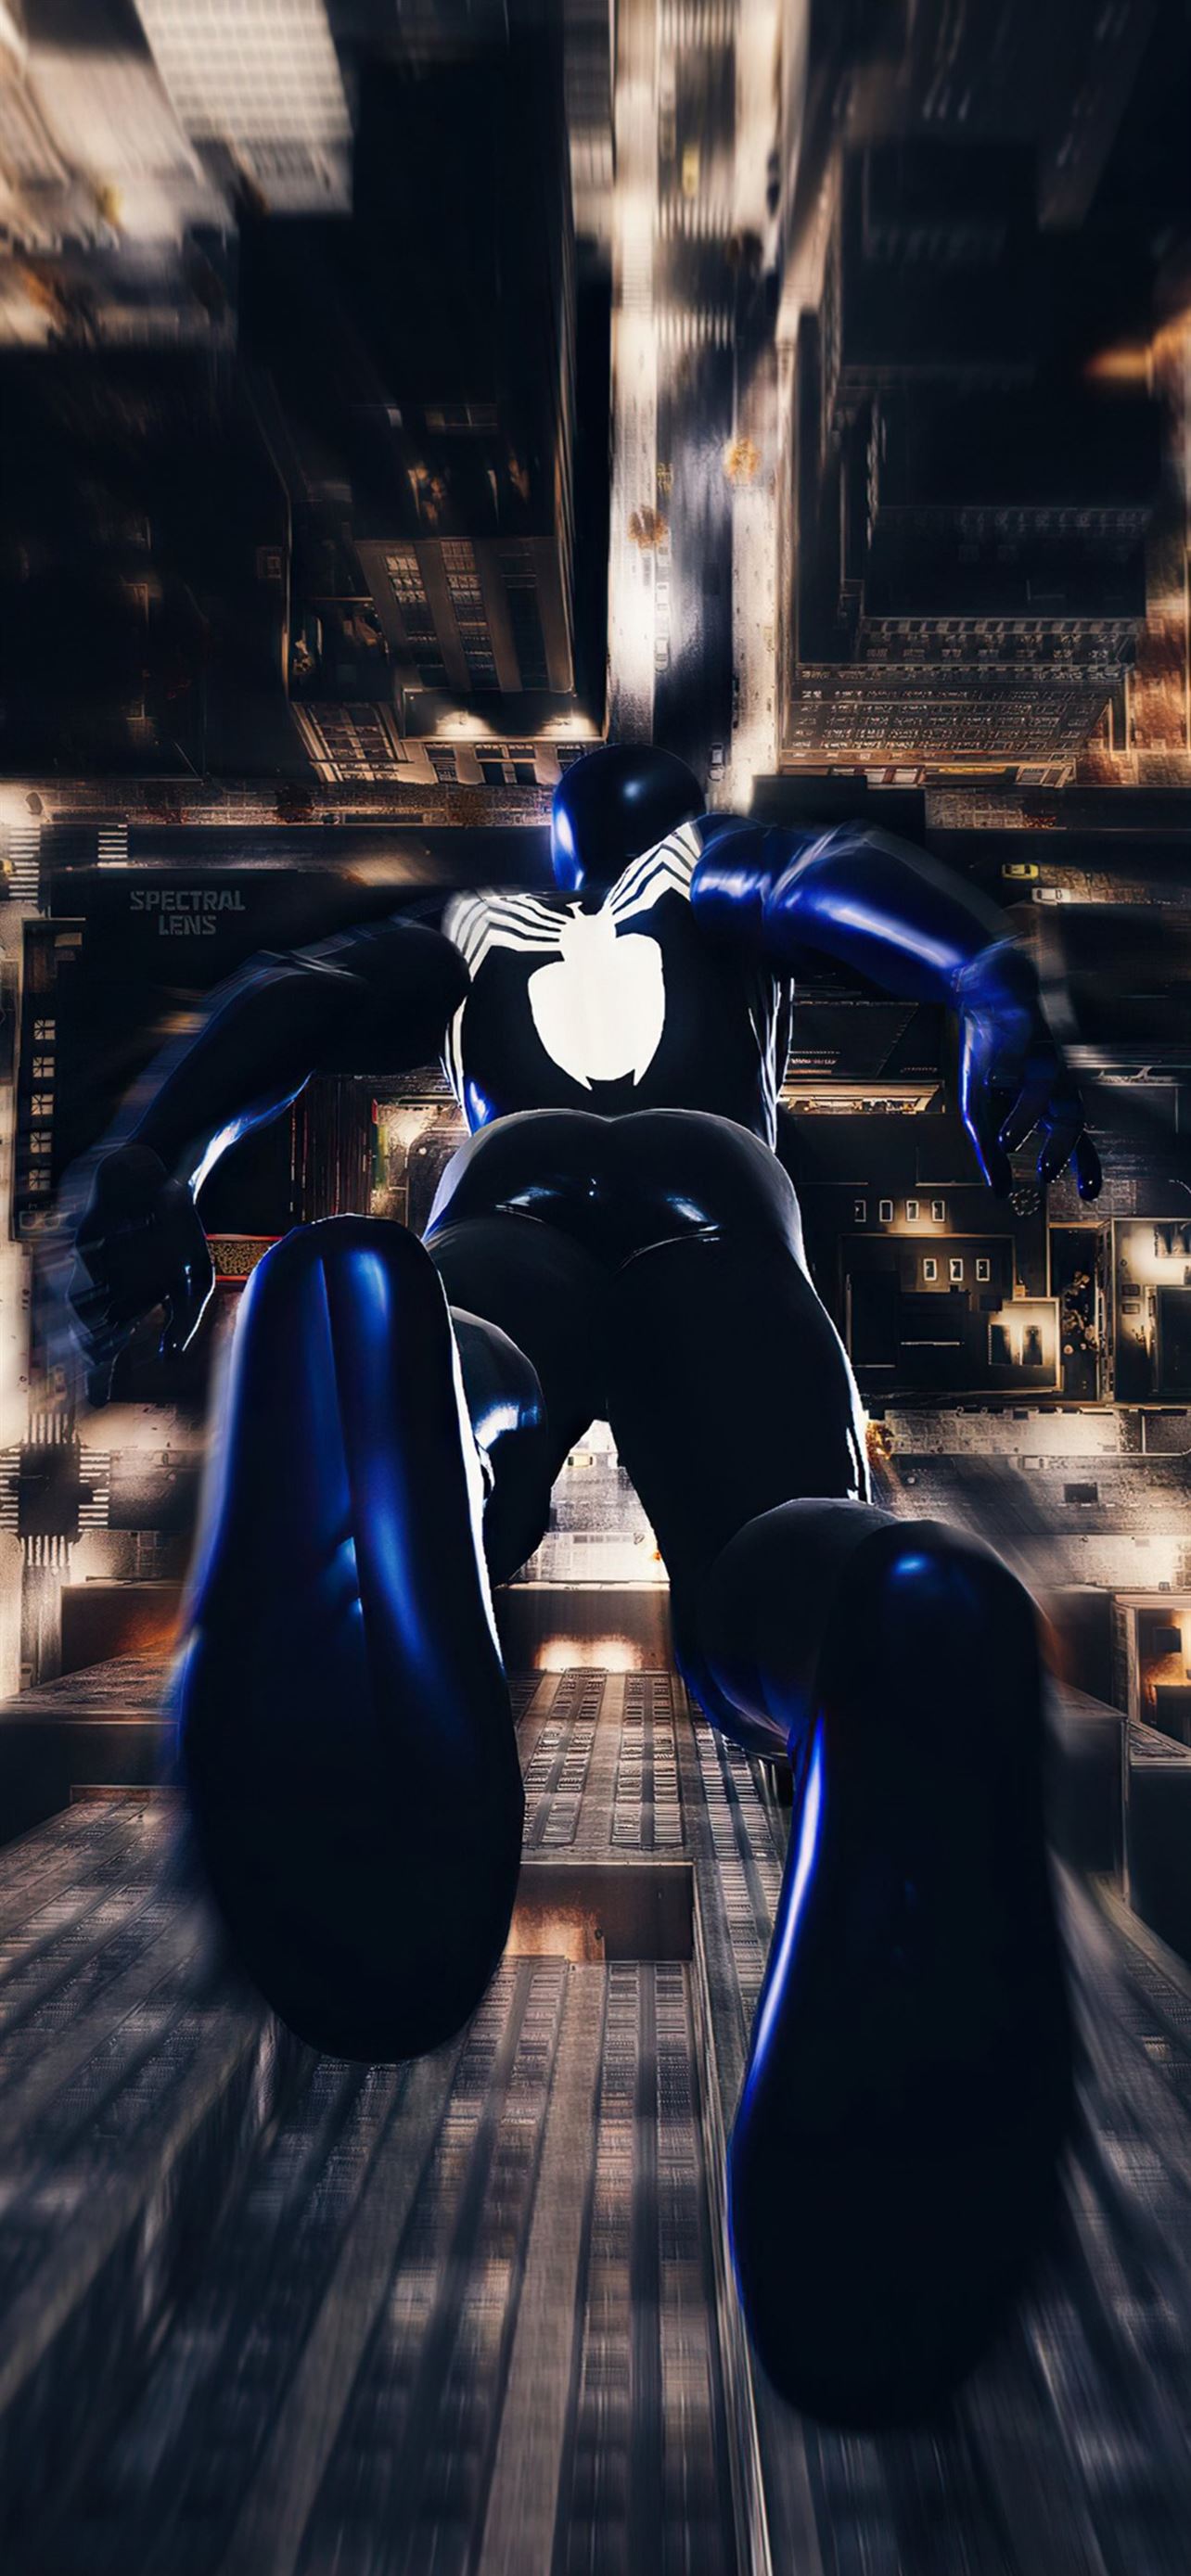 Spider Man New Venom Look 4K wallpaper download